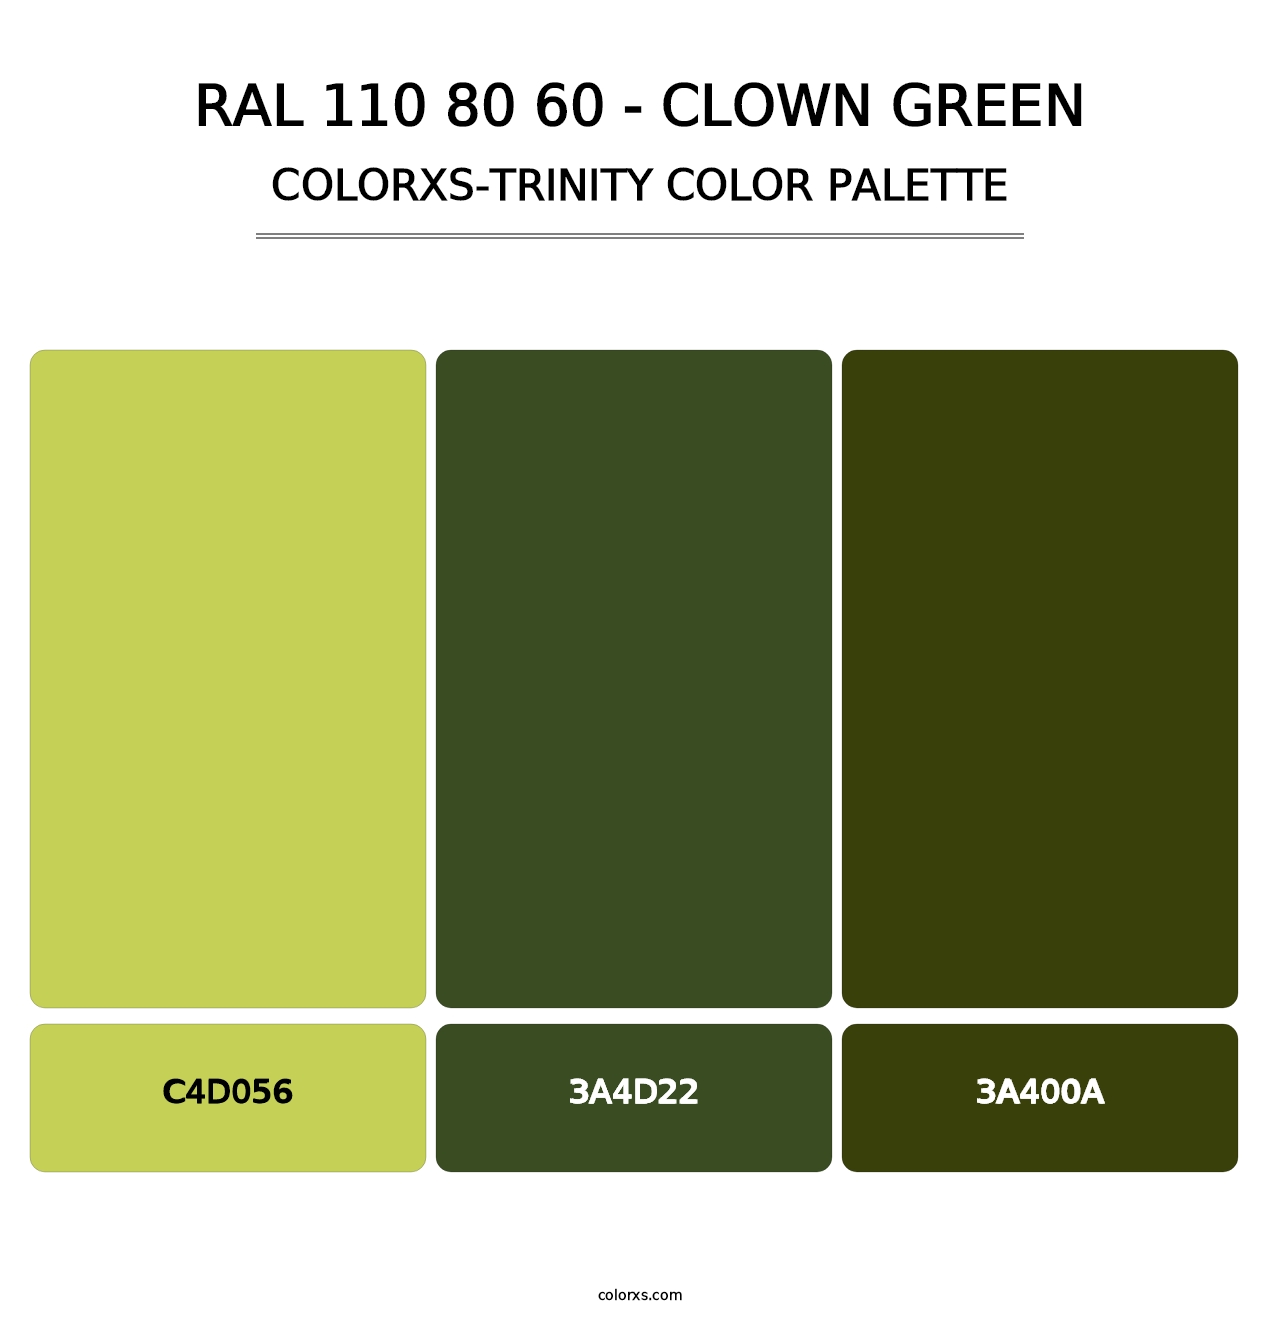 RAL 110 80 60 - Clown Green - Colorxs Trinity Palette